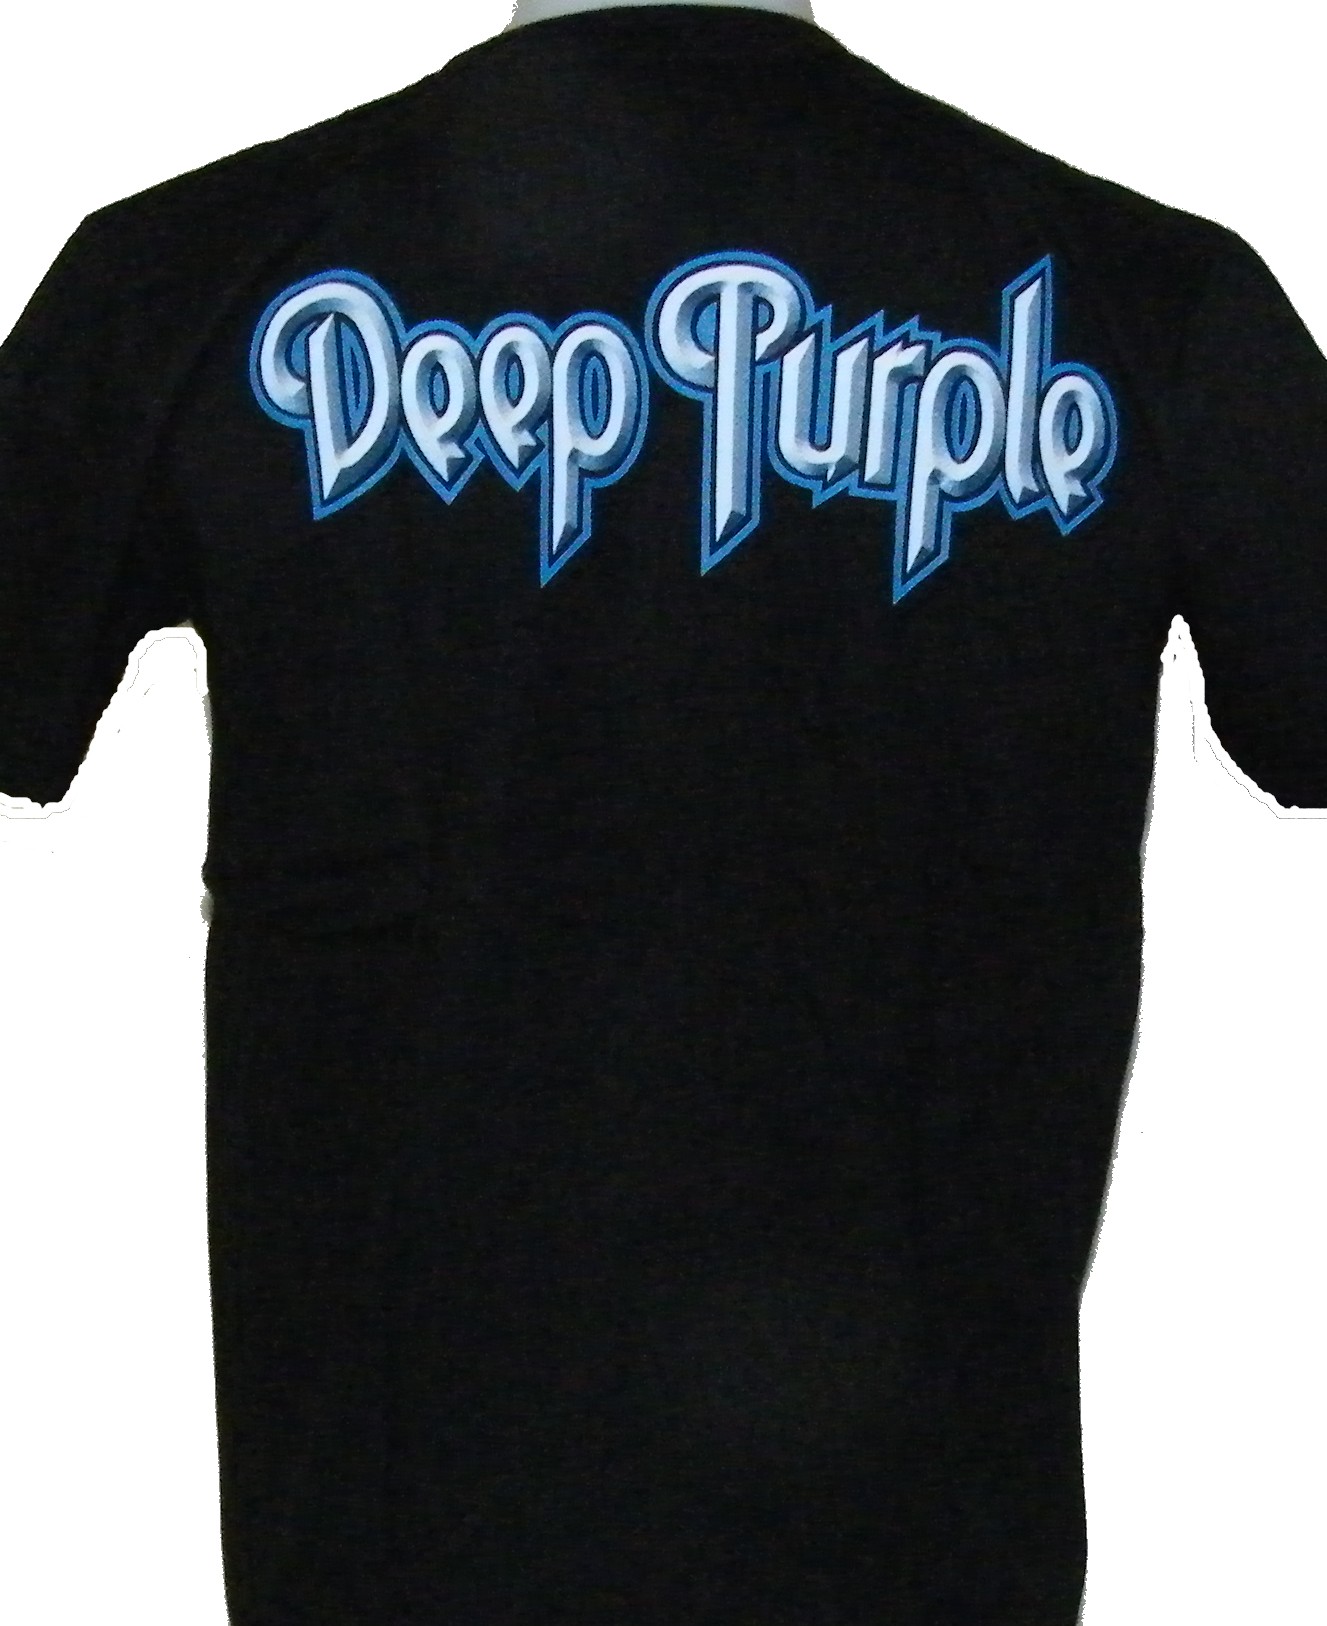 Deep Purple t-shirt size S